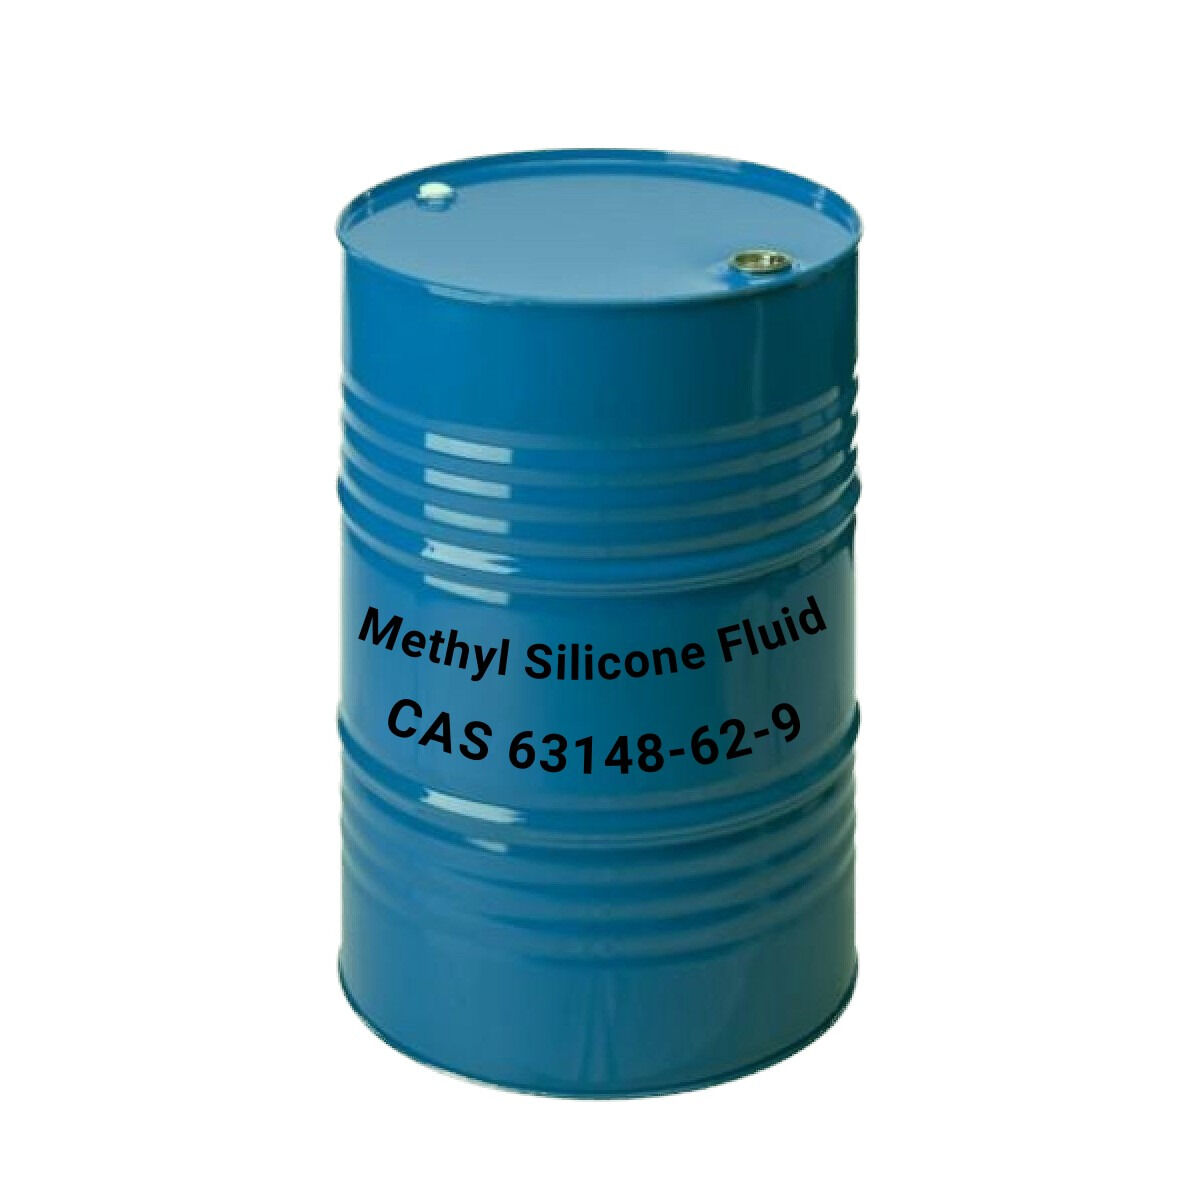 Methyl Silicone Fluid
CAS 63148-62-9